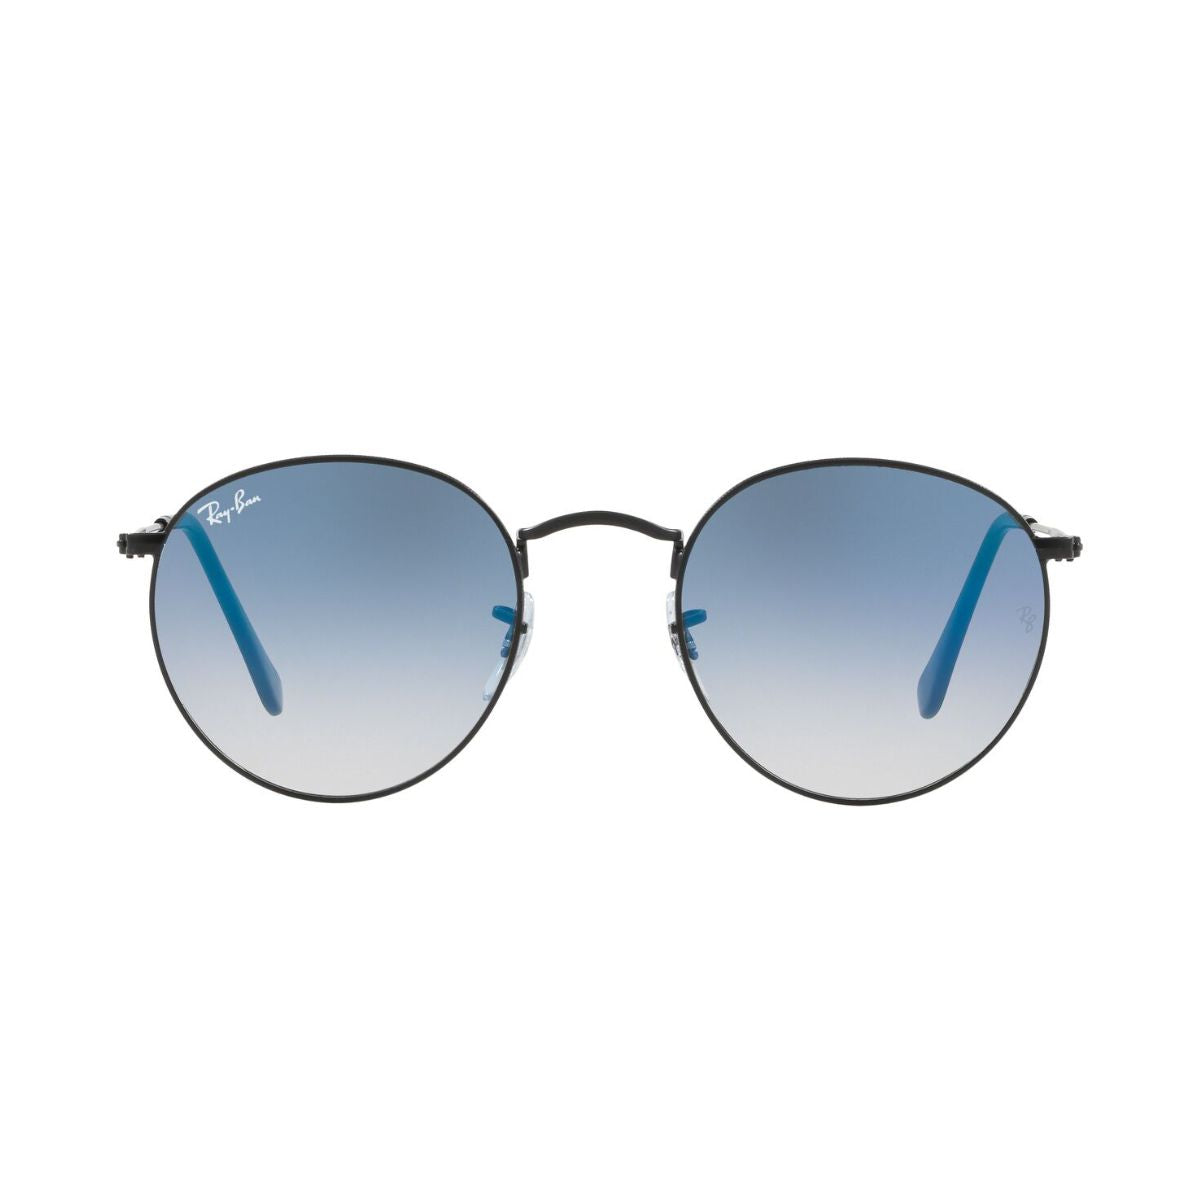 "Buy Rayban 3447 006/3F Sunglasses for Men's Online At Optorium"